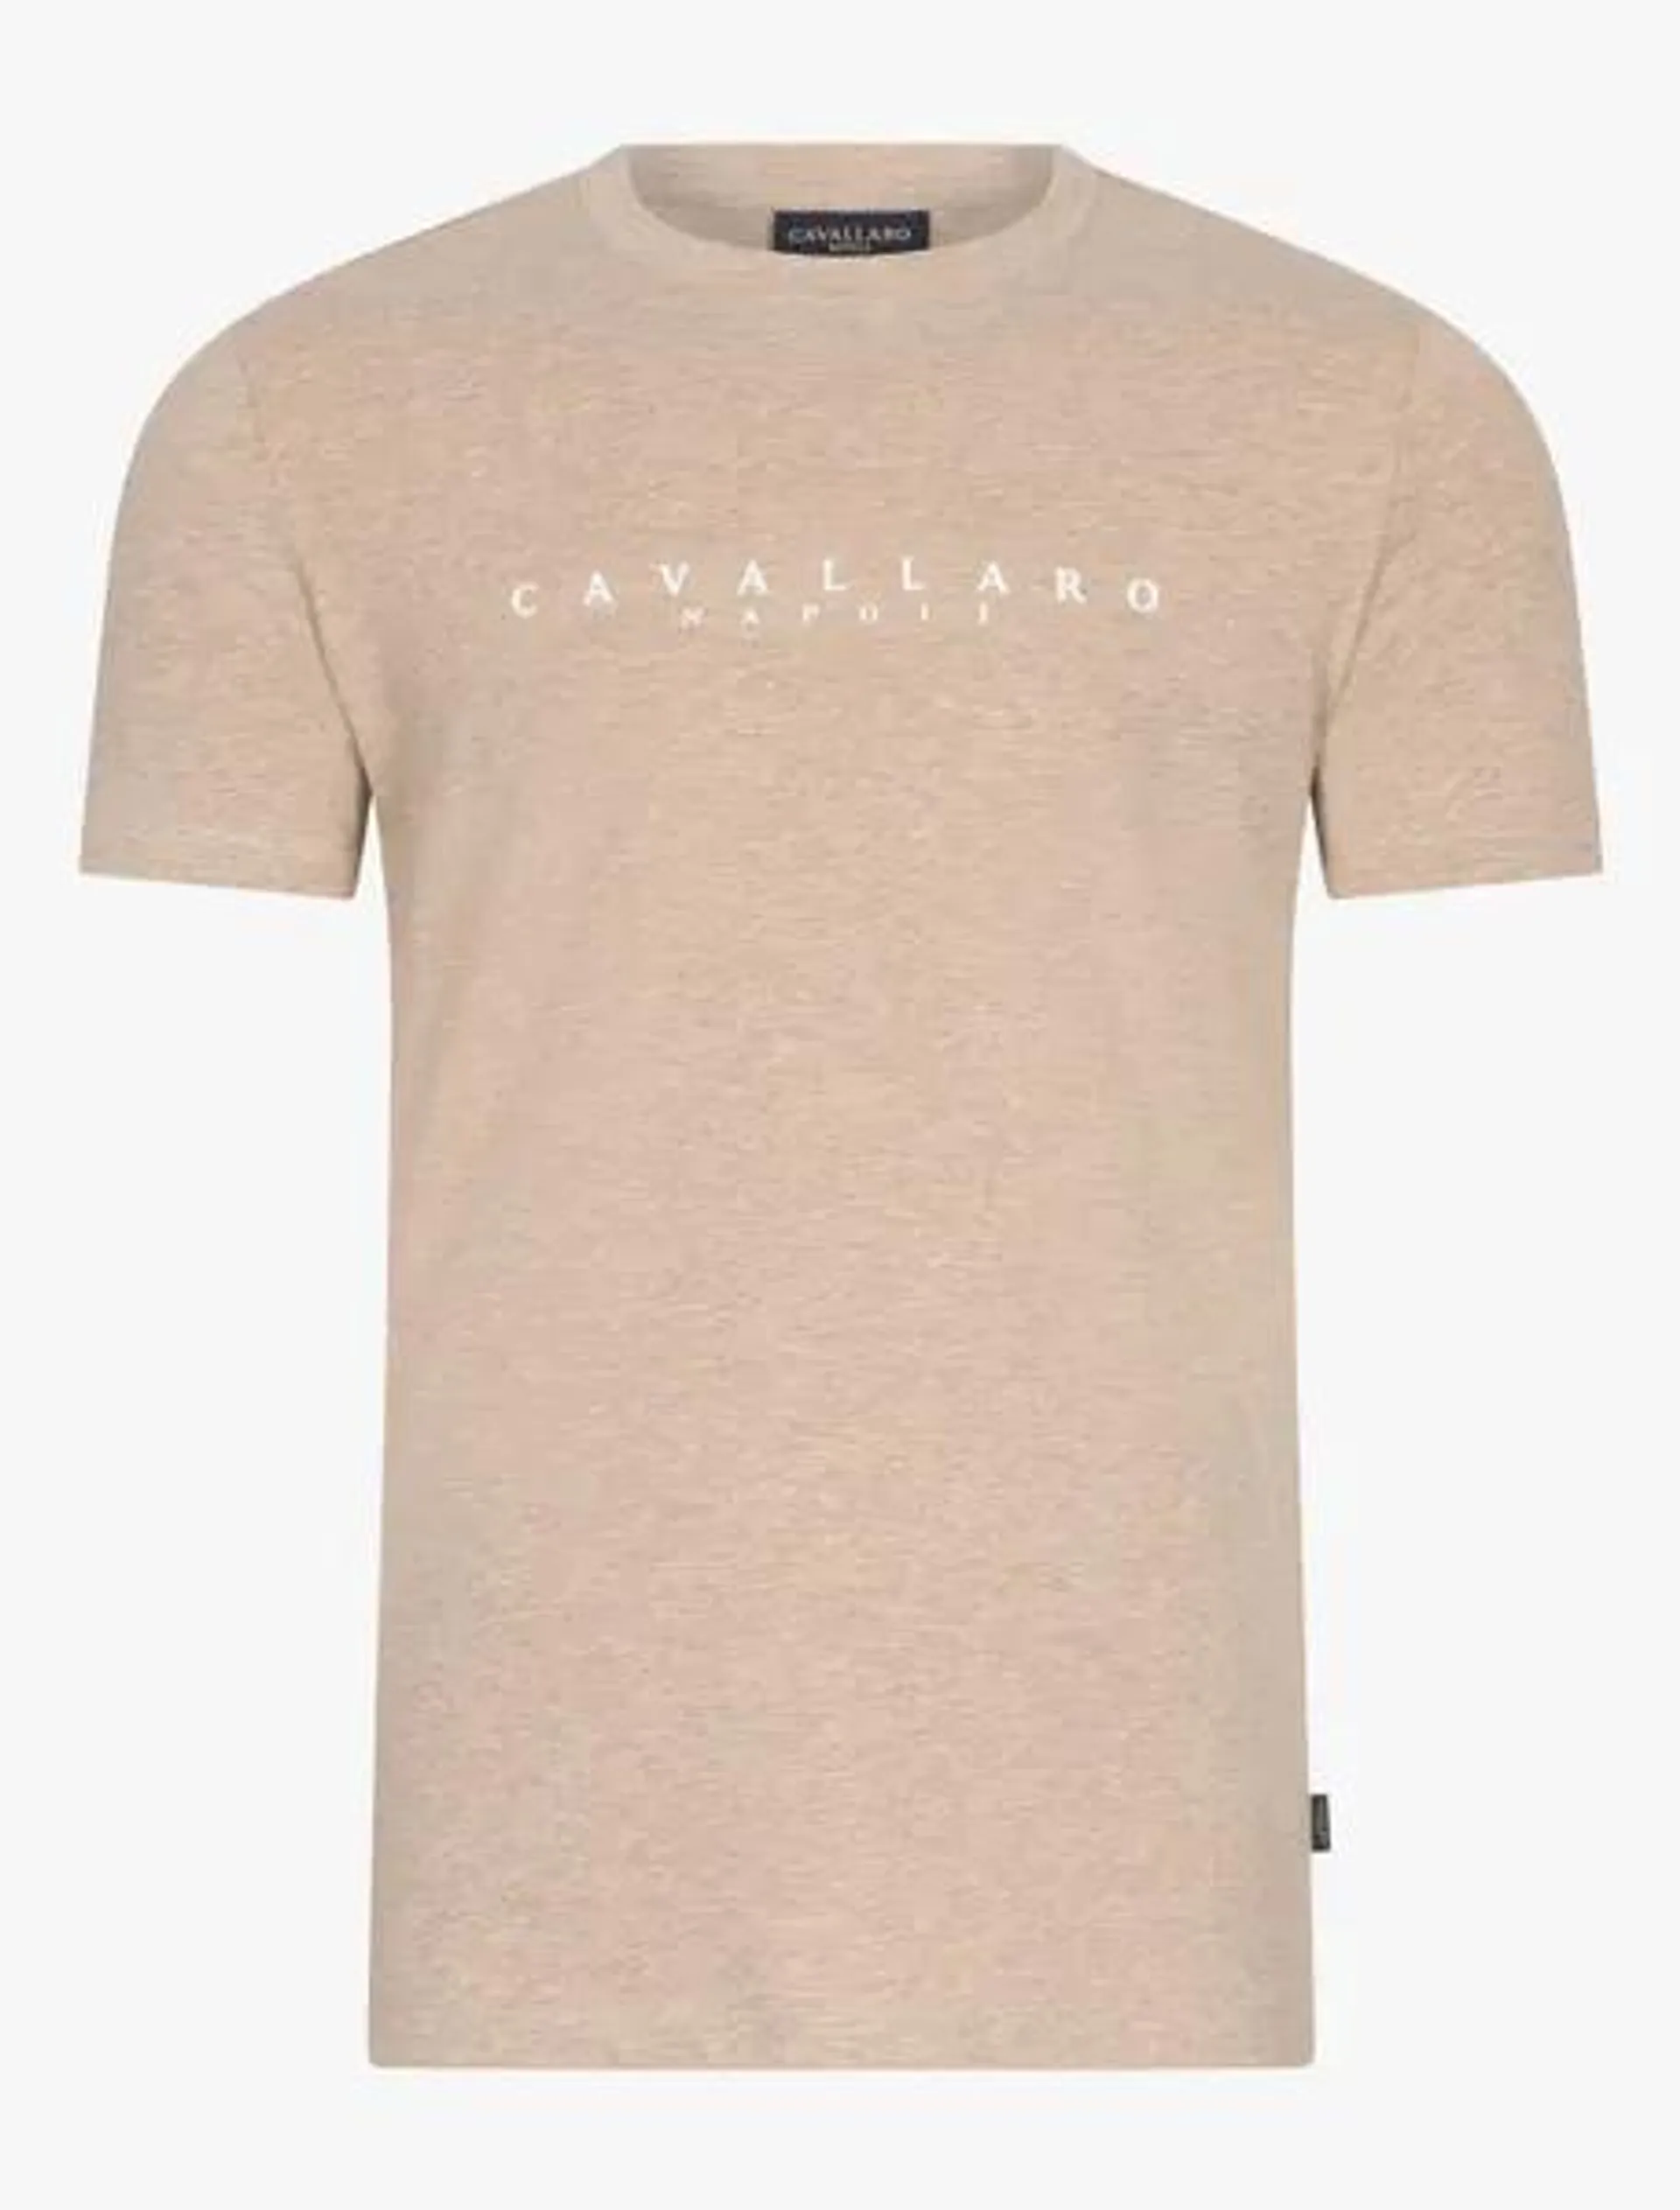 Cavagio T-shirt Beige Melange